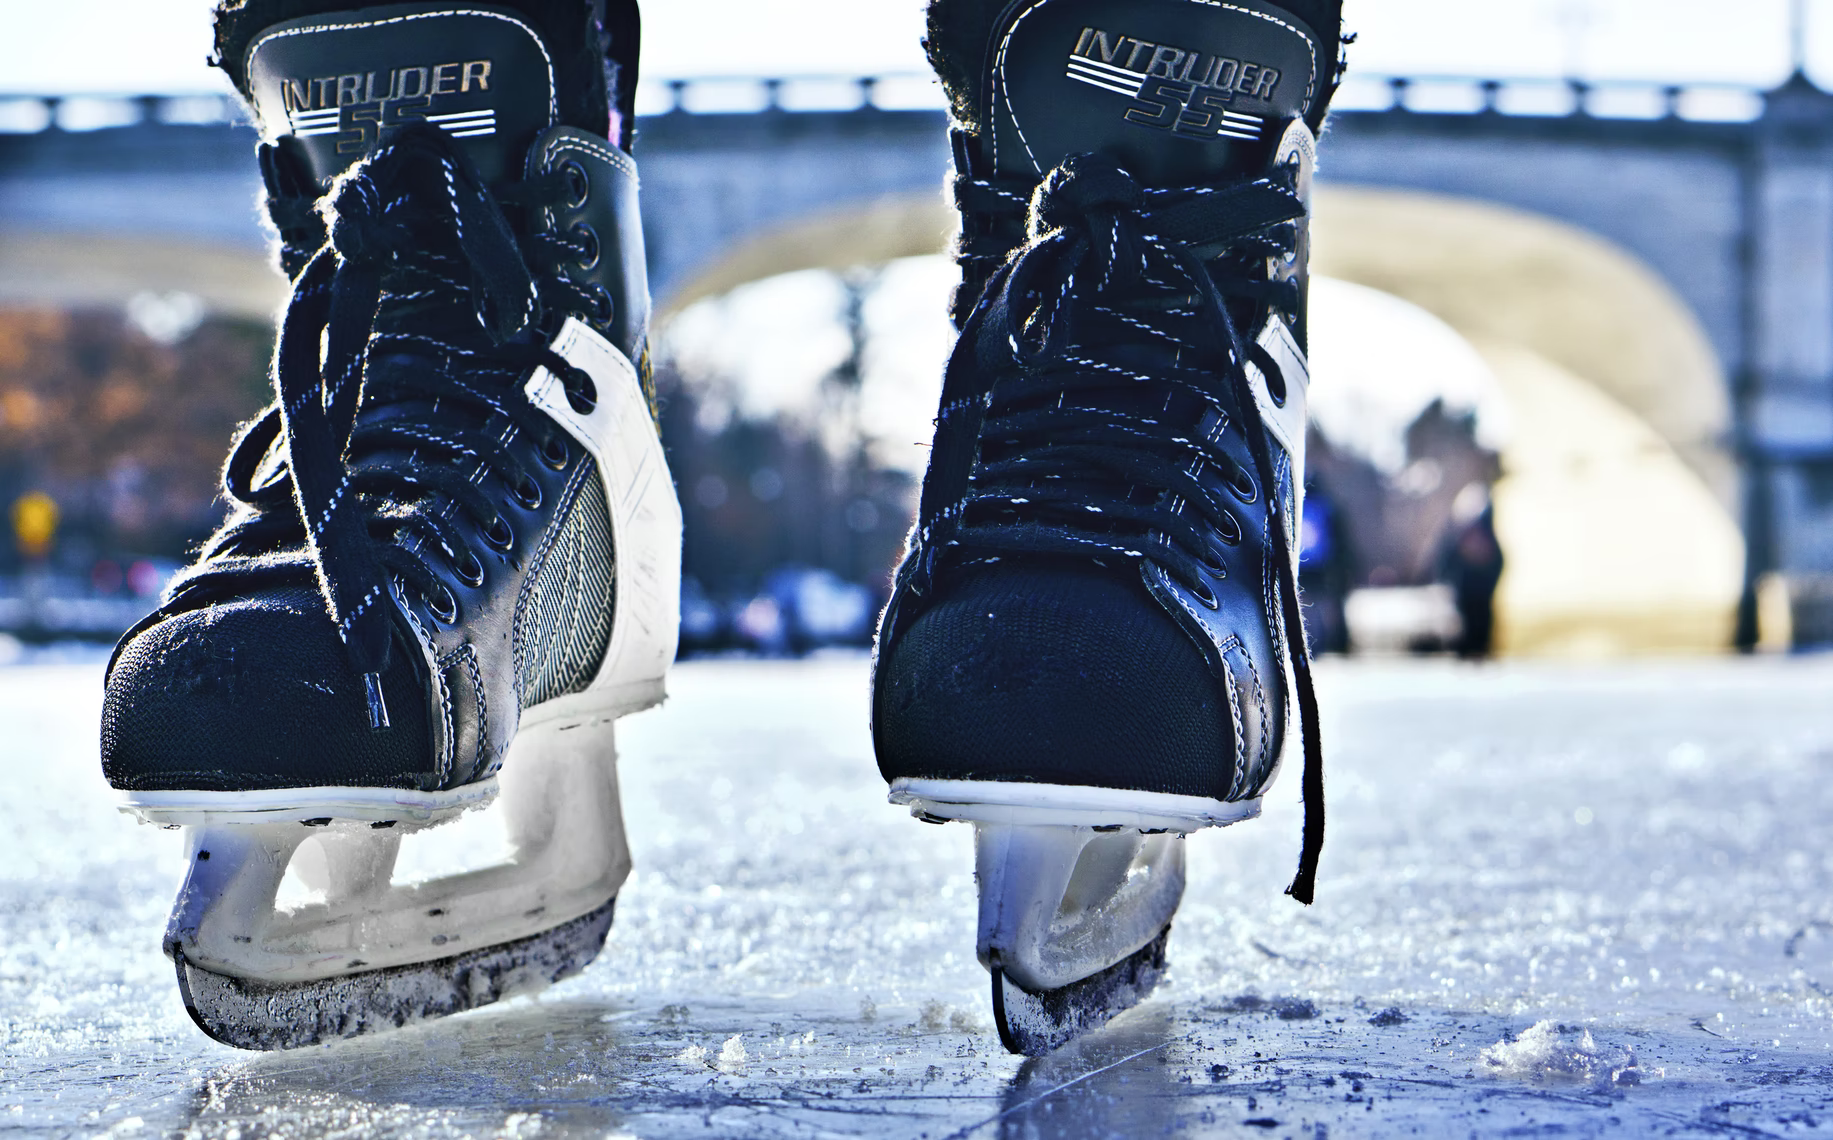 An ice hockey player’s skates